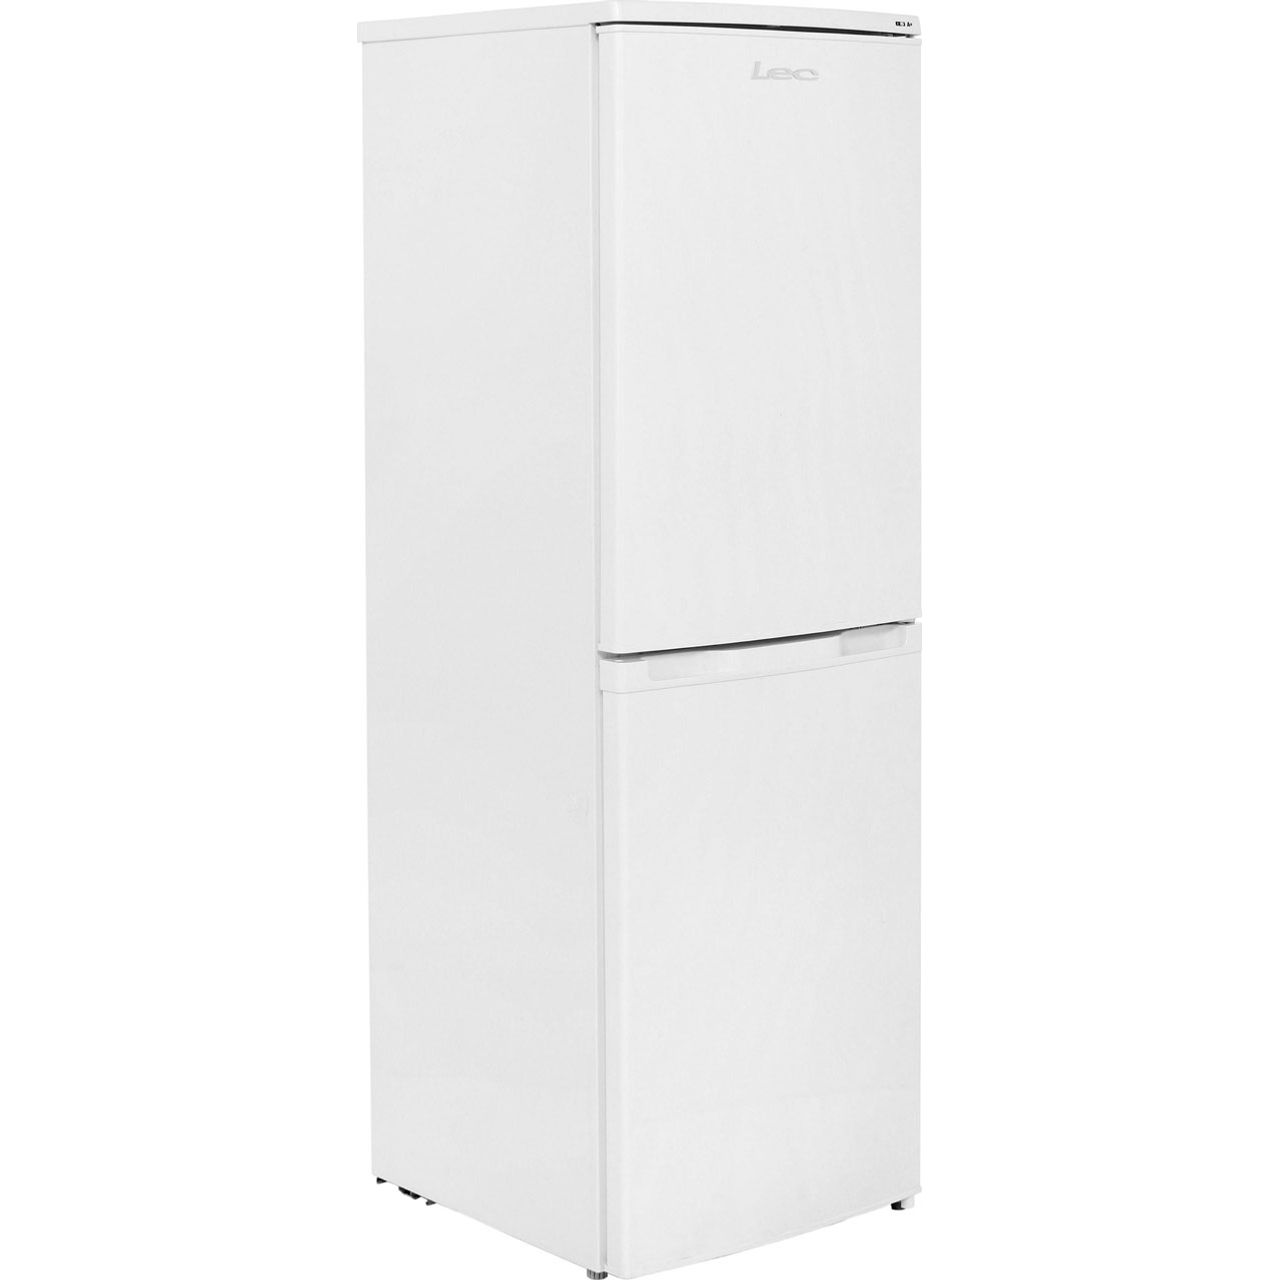 46+ Lec stainless steel fridge freezer info